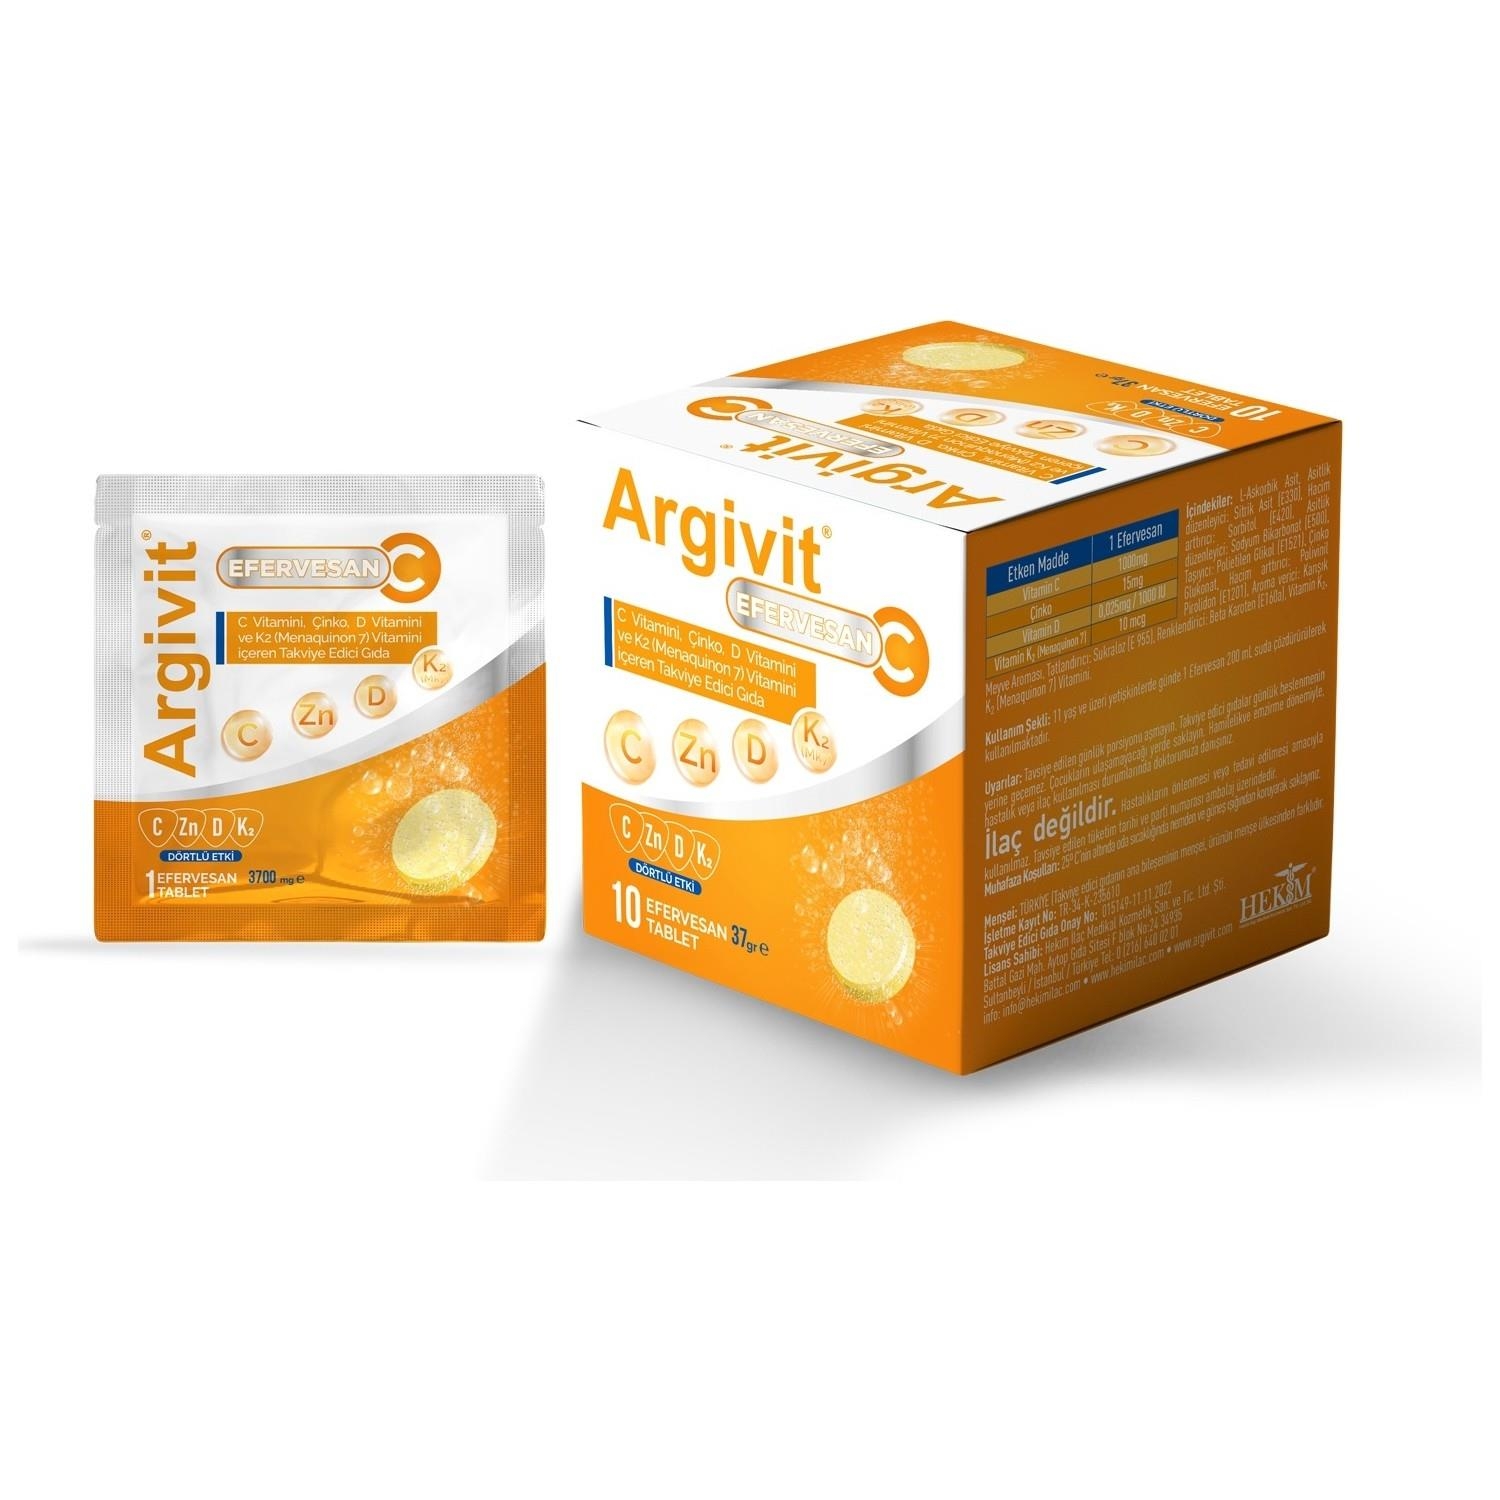 Argivit Efervesan C Vitamini, Çinko, D Vitamini ve K2 Vitamini İçeren 10 Saşe - 1